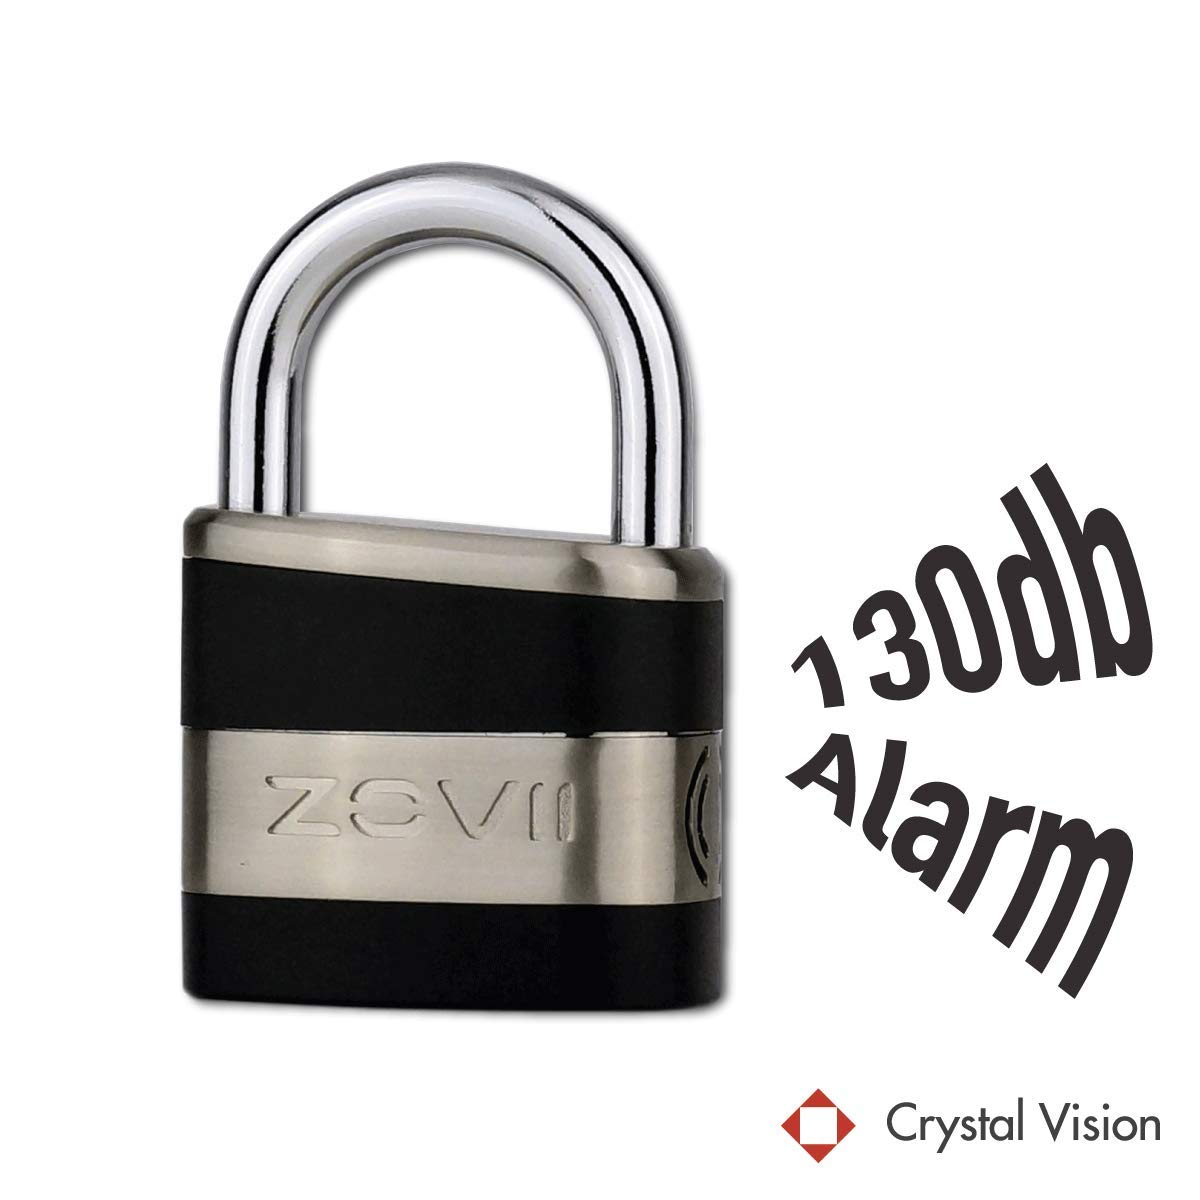 Crystal Vision Alarm Padlock